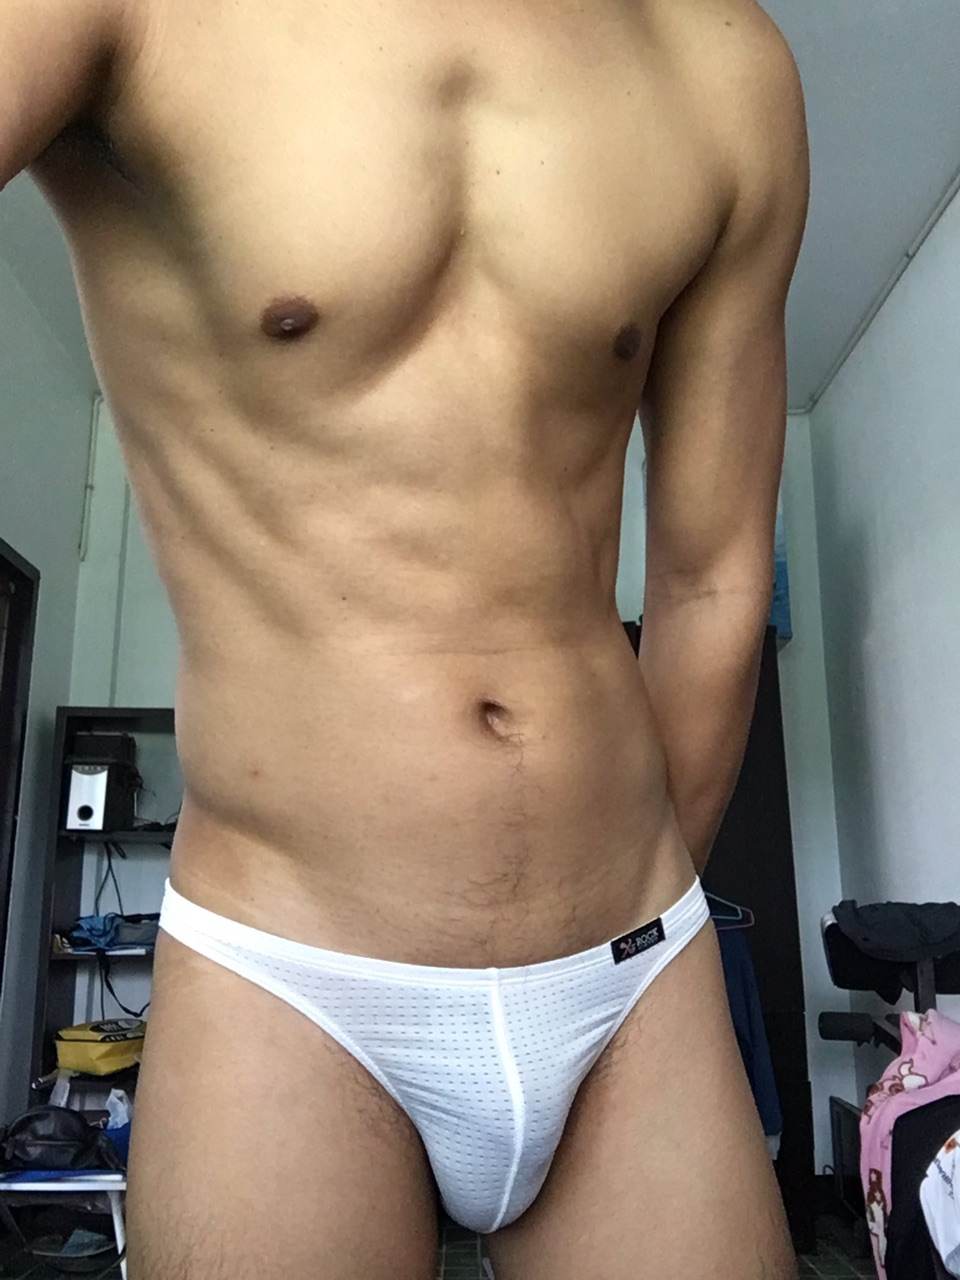 Hot men in underwear 474